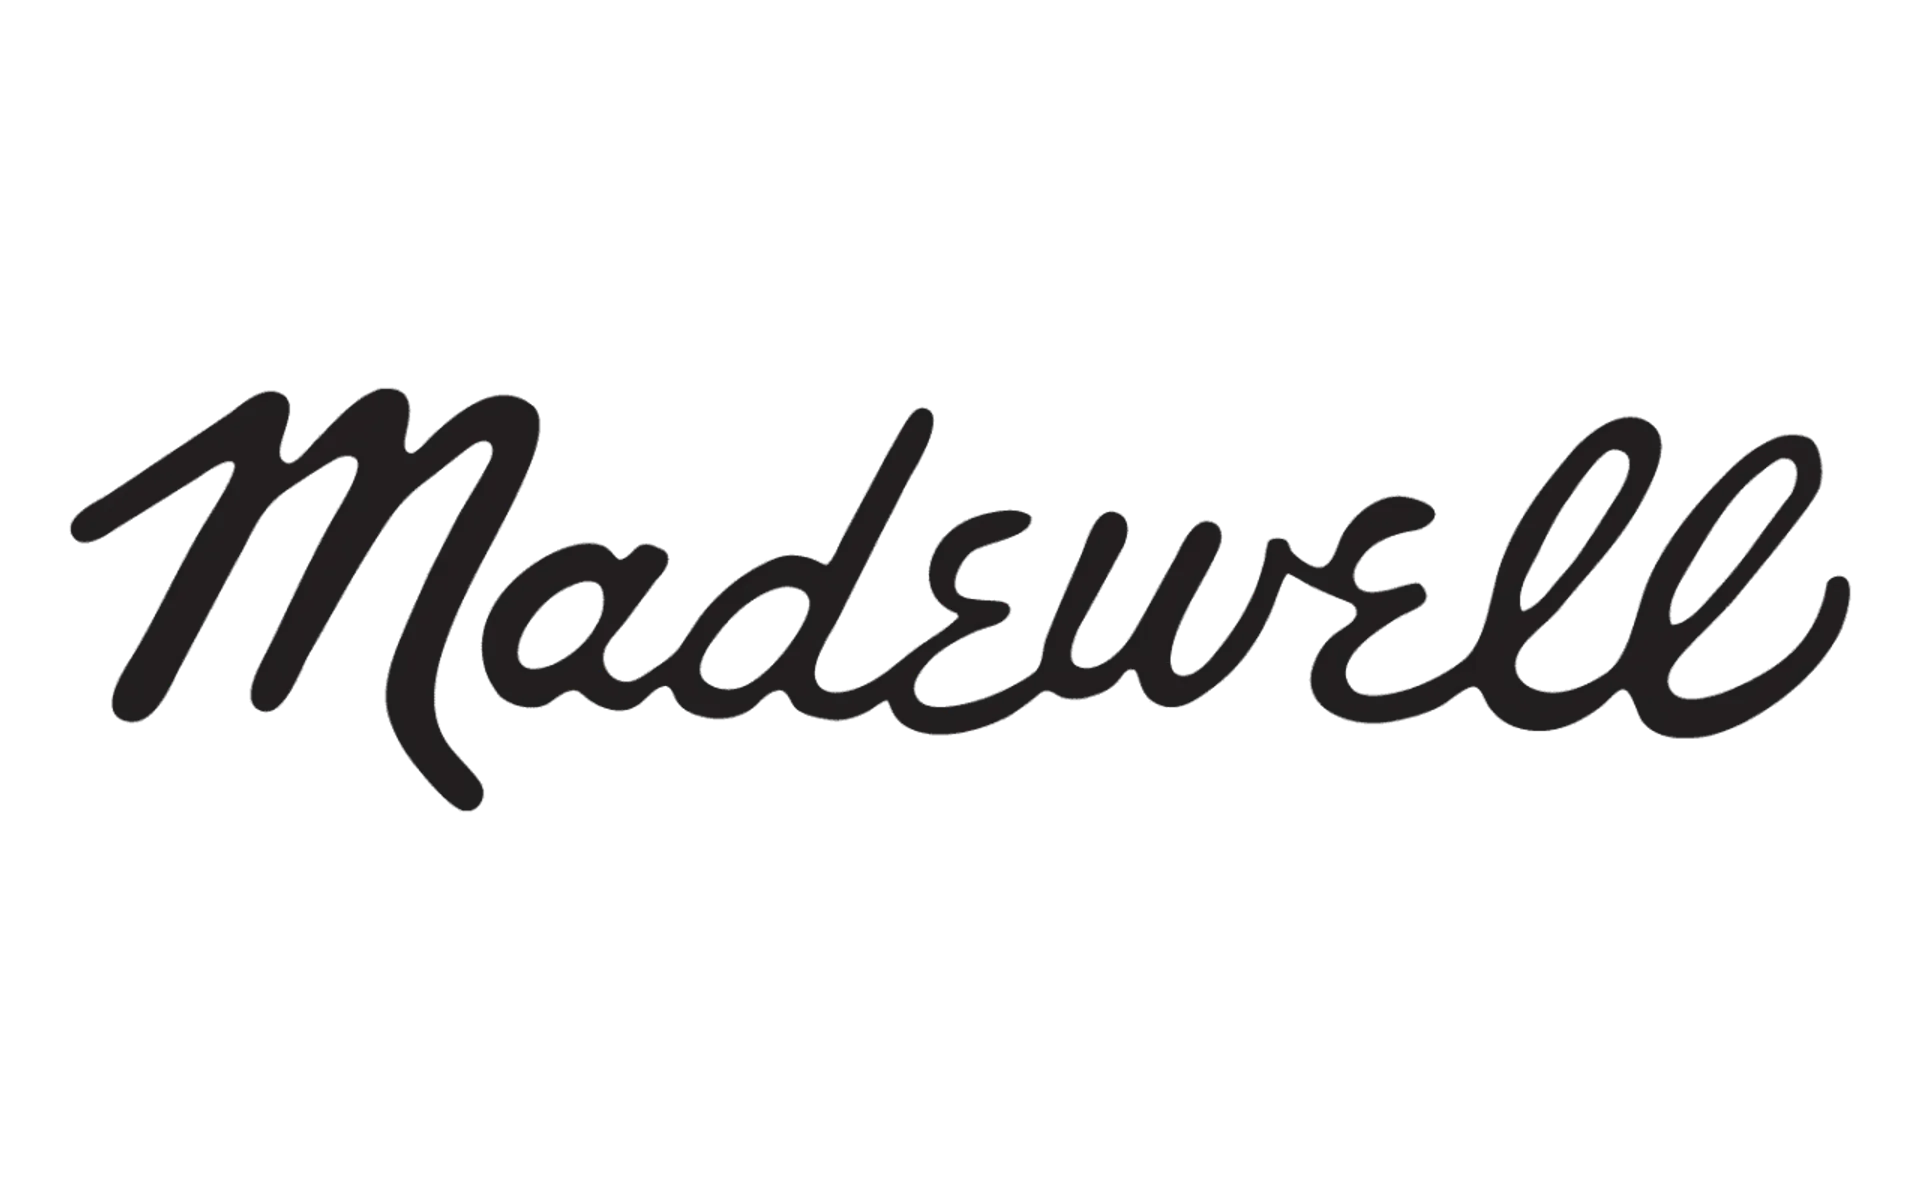 MADEWELL logo